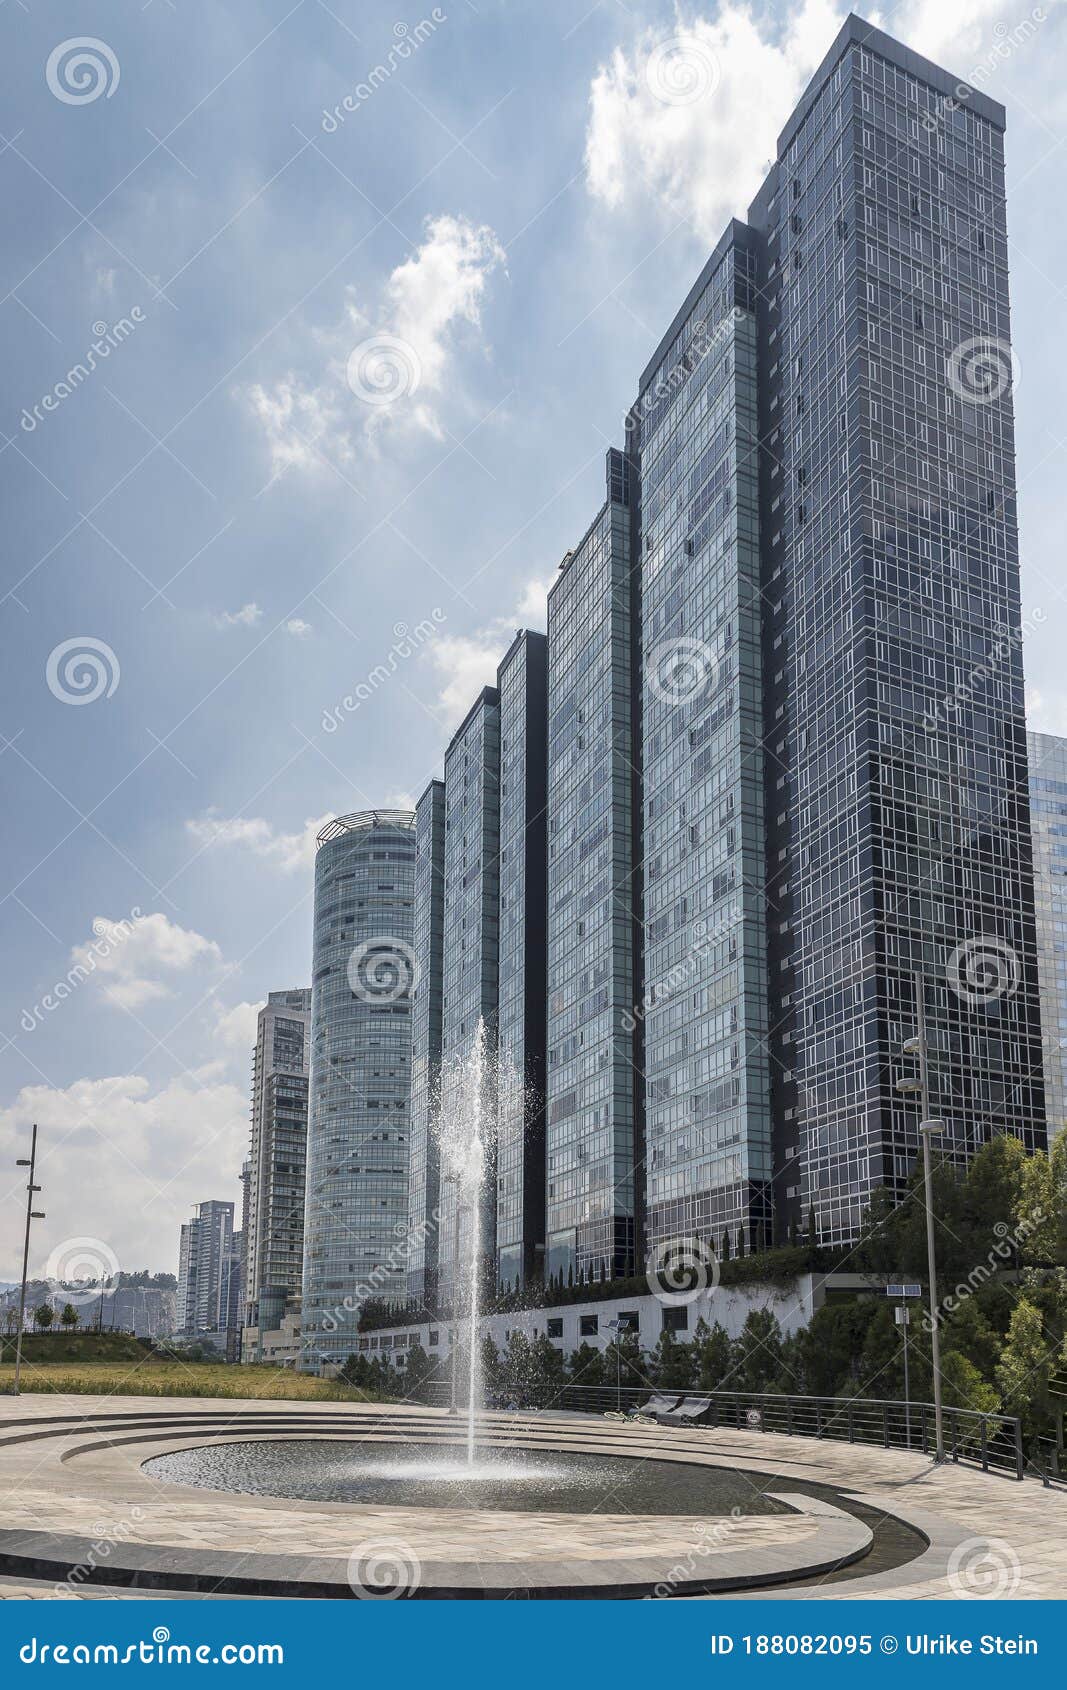 high modern skyscrapers behind a fountain